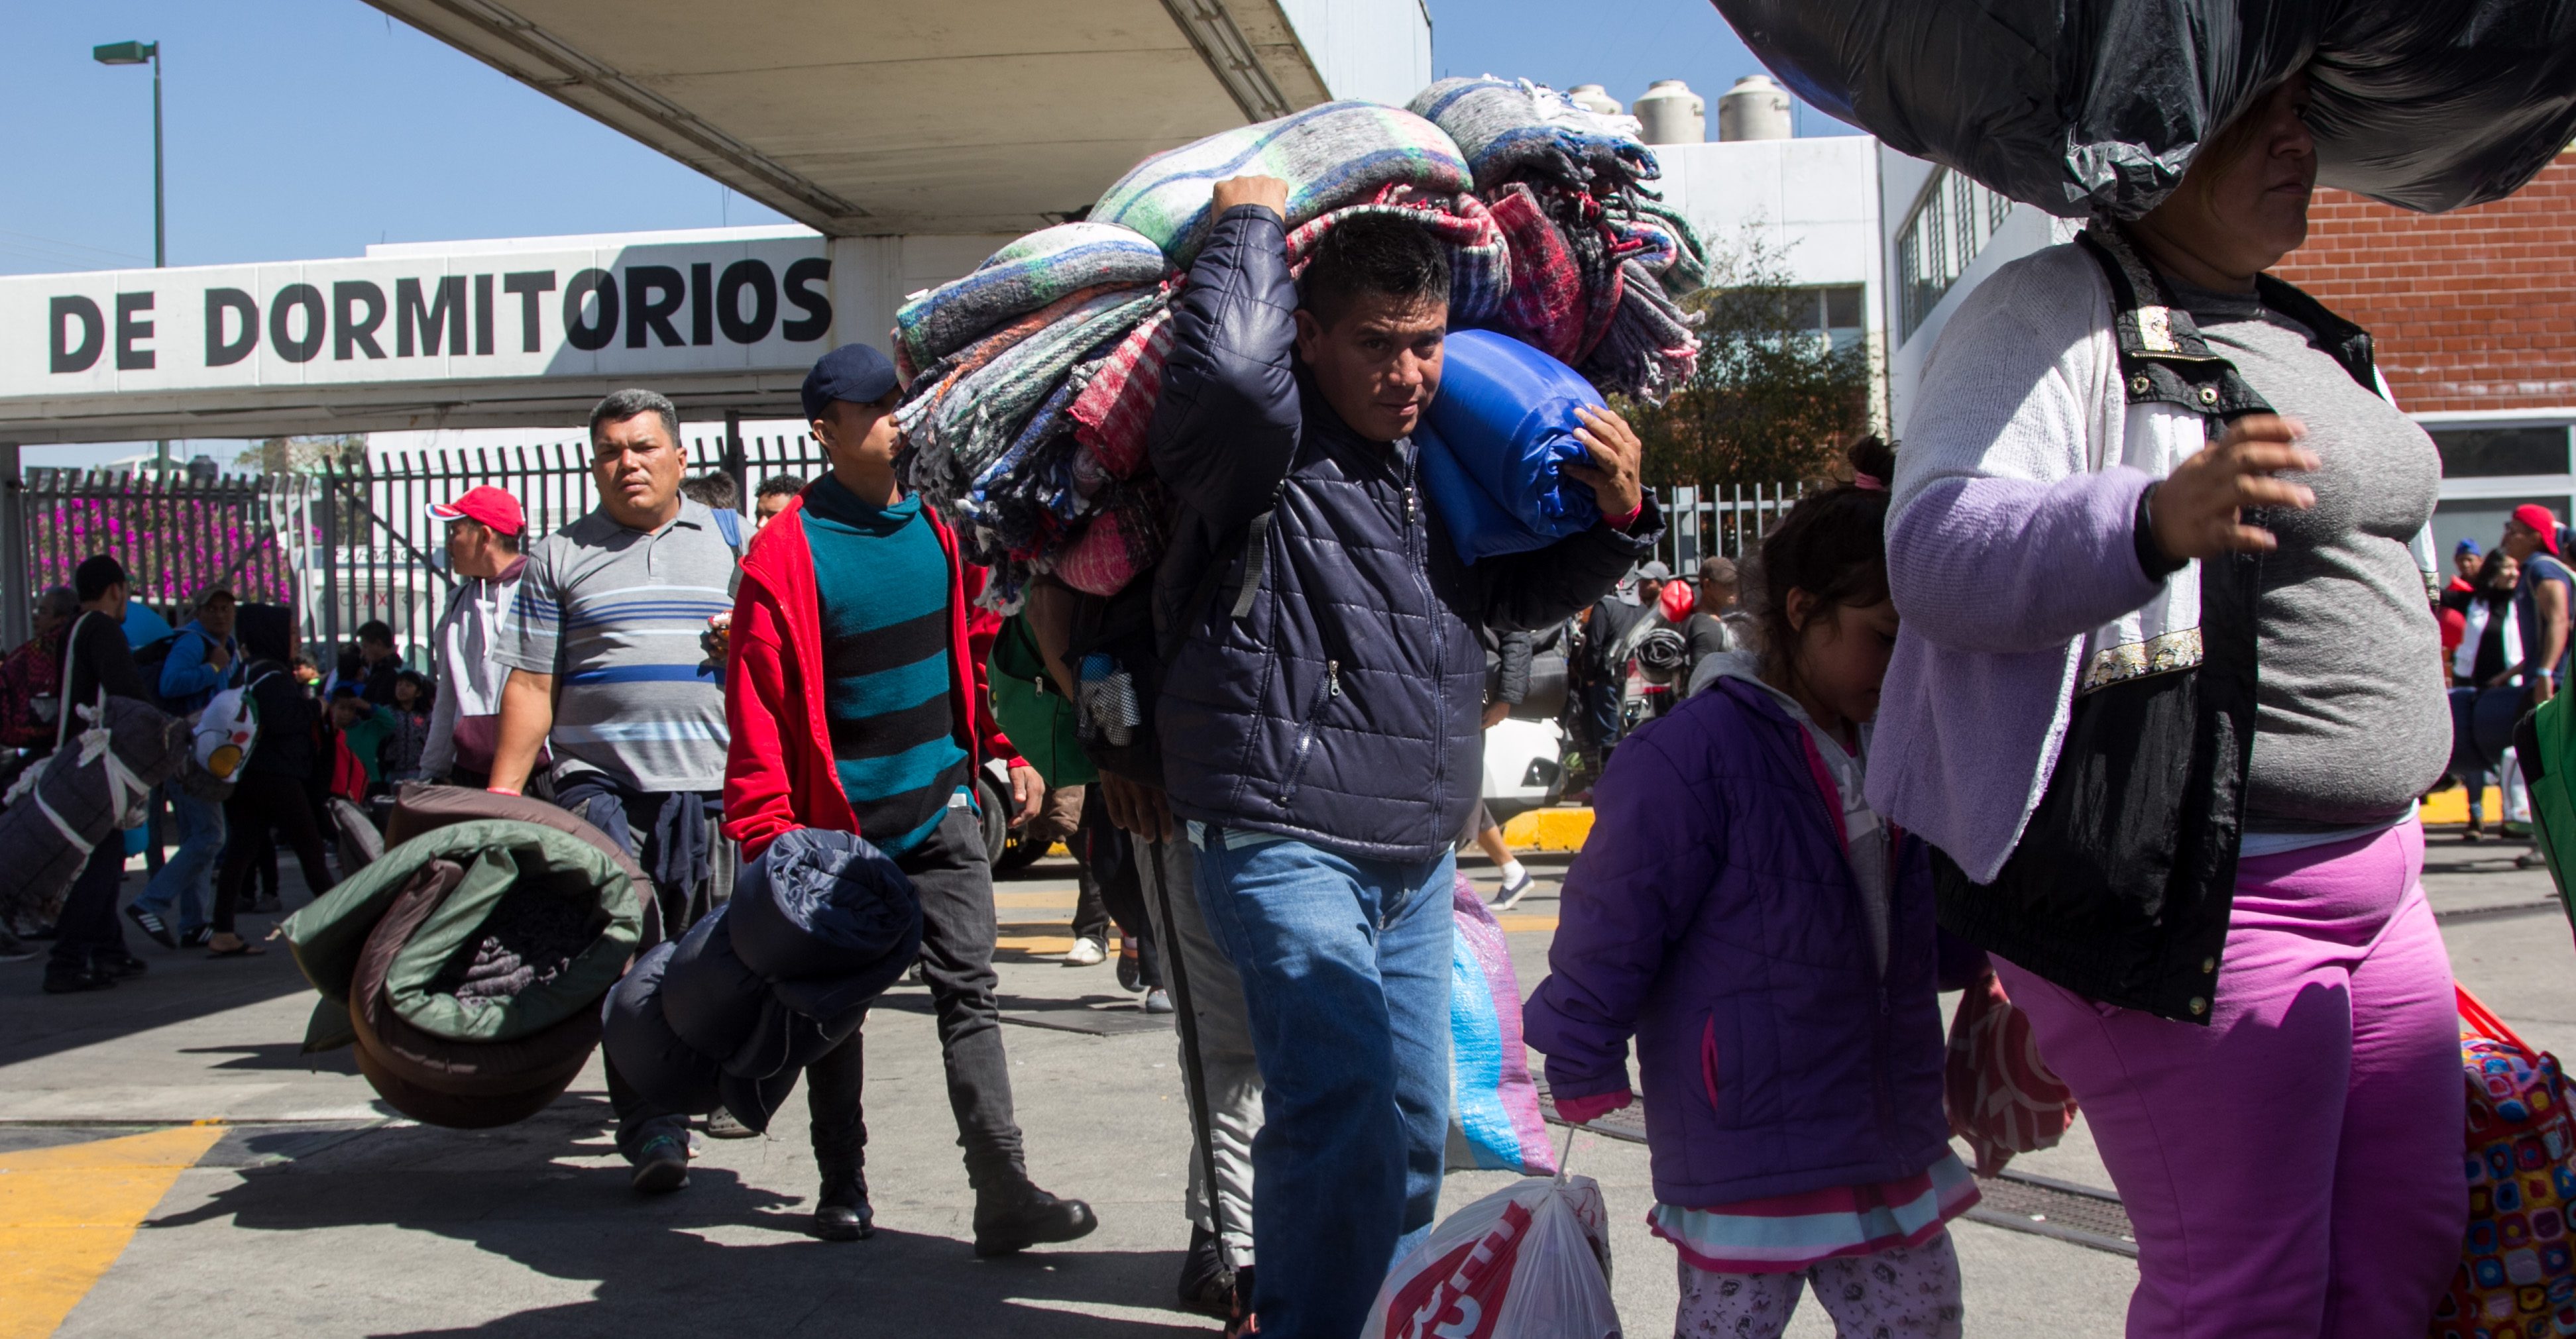 EU expulsa 240 migrantes a México desde enero